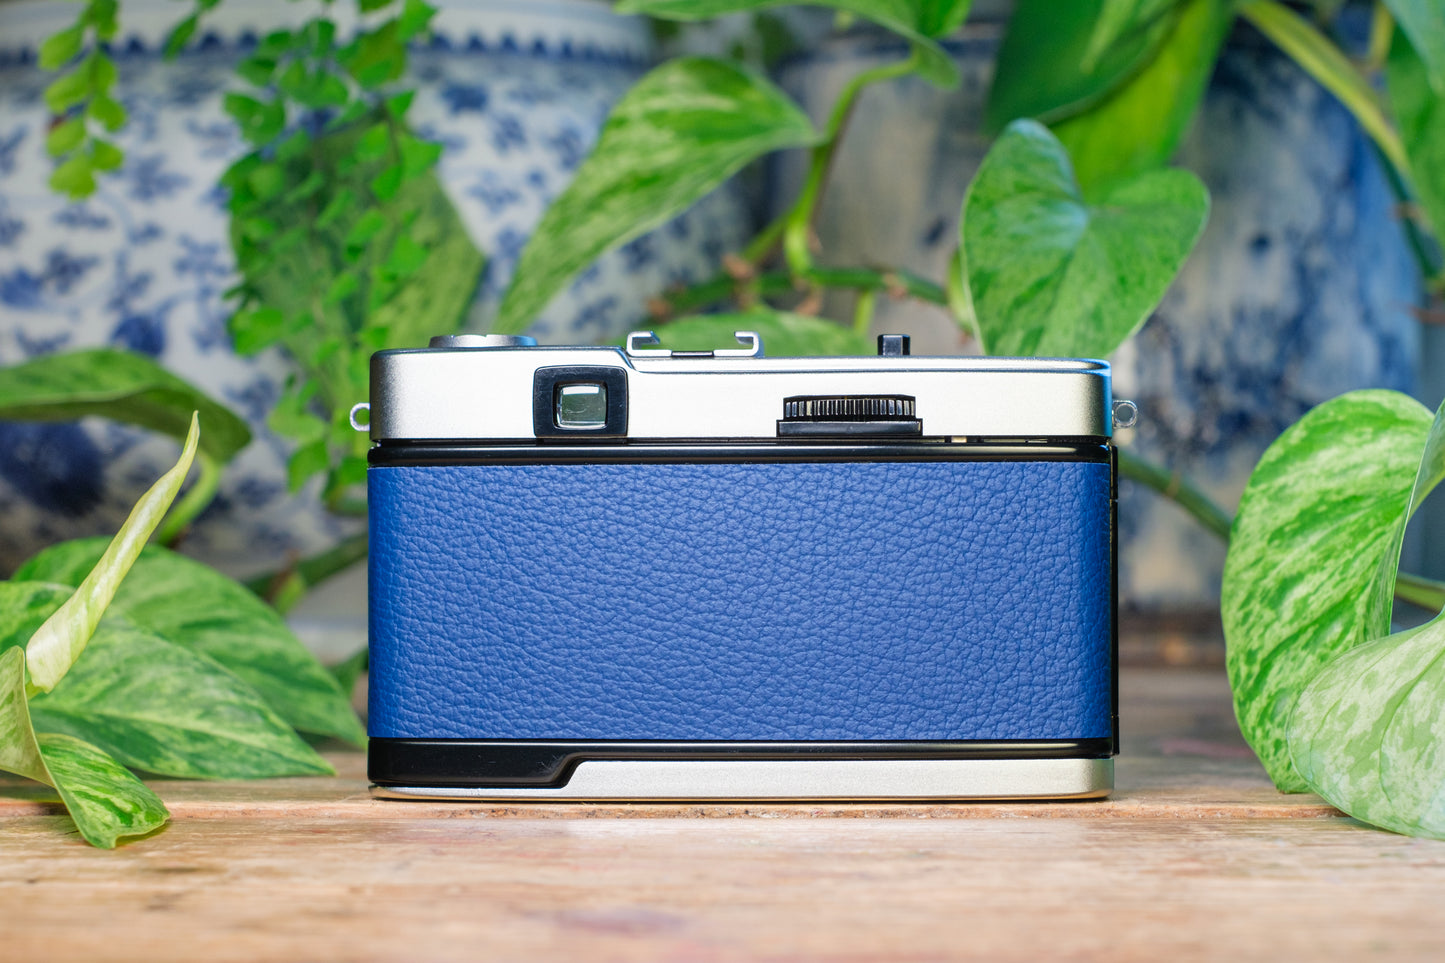 Olympus Trip 35 Vintage 35mm Film Camera - Royal Blue | Tested & Fully Refurbished | 100 Day Guarantee